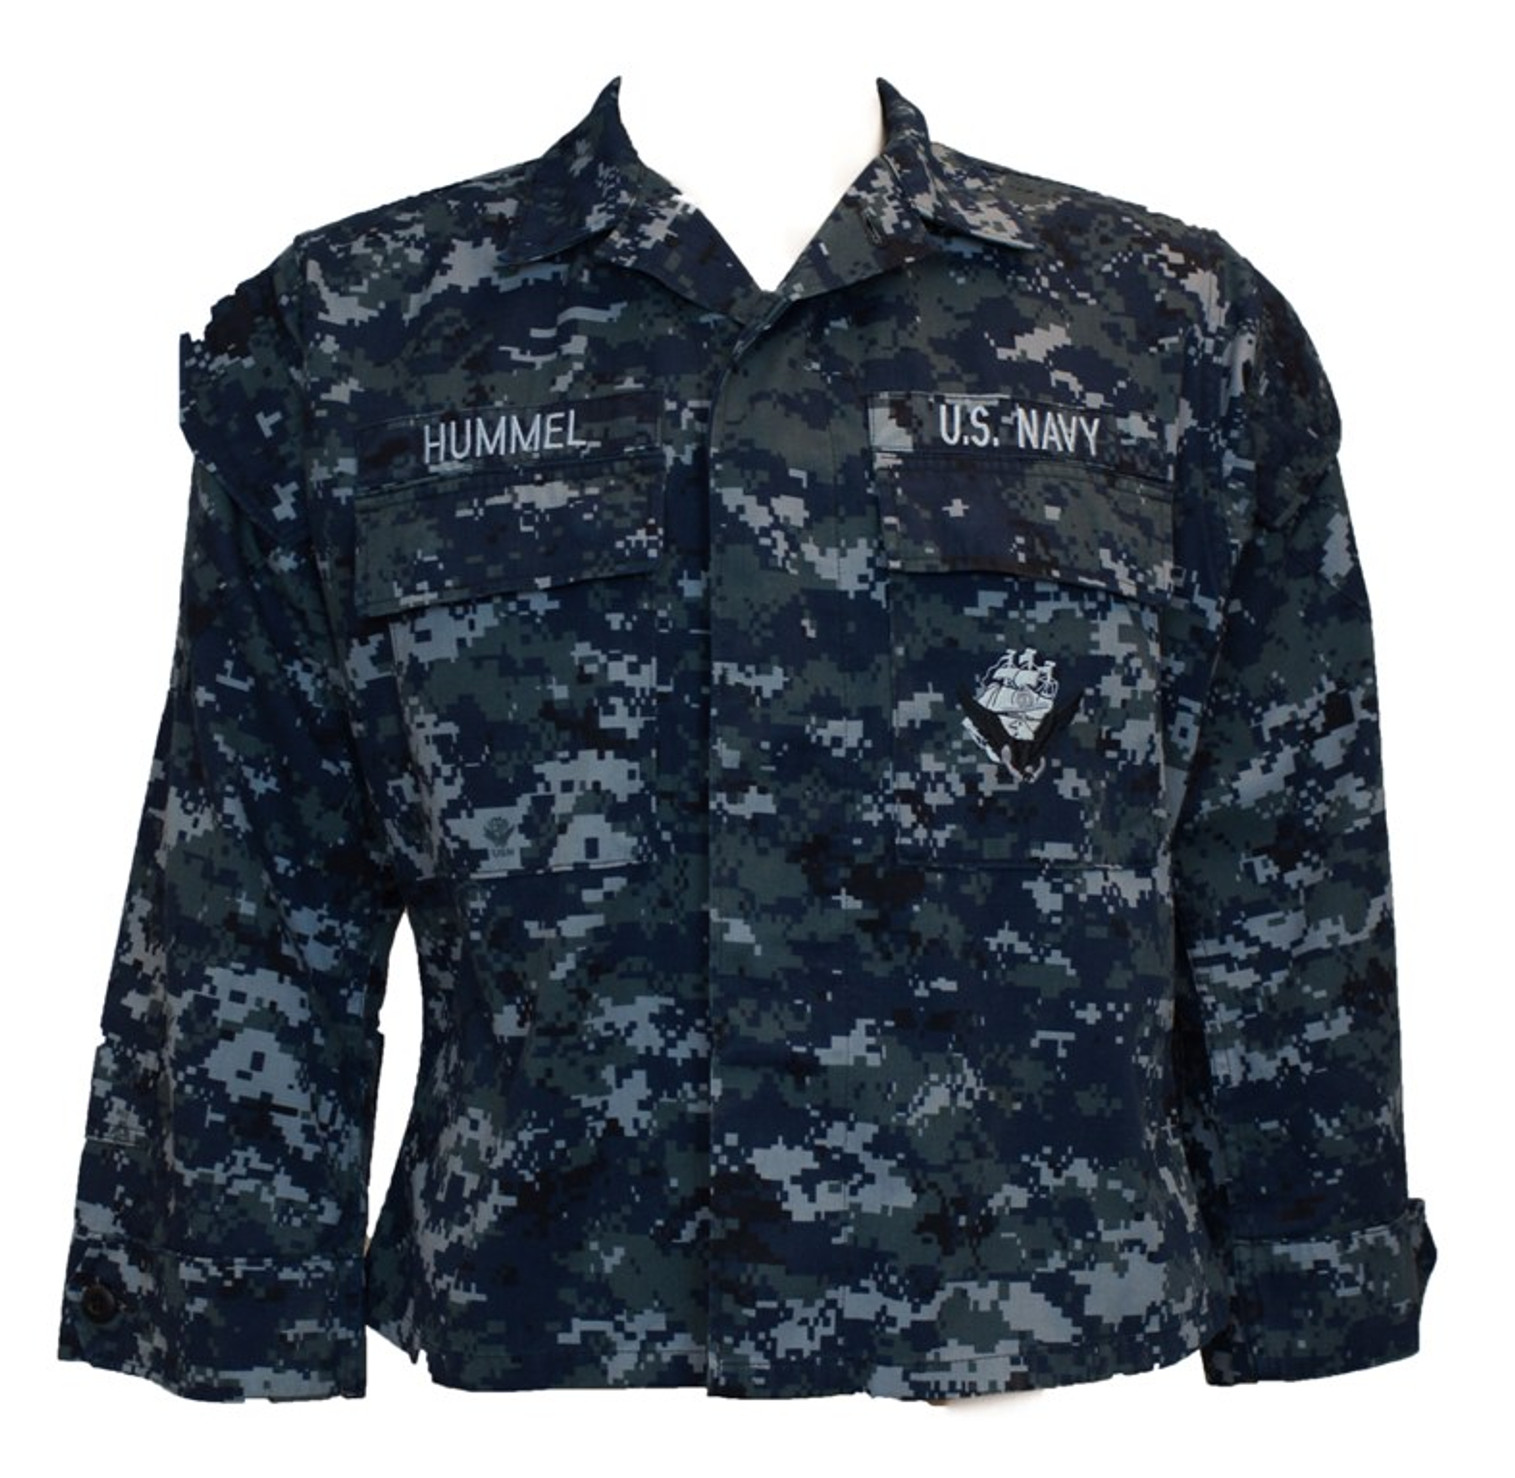 U.S. Armed Forces Naval Digital Field Shirt - Large Long